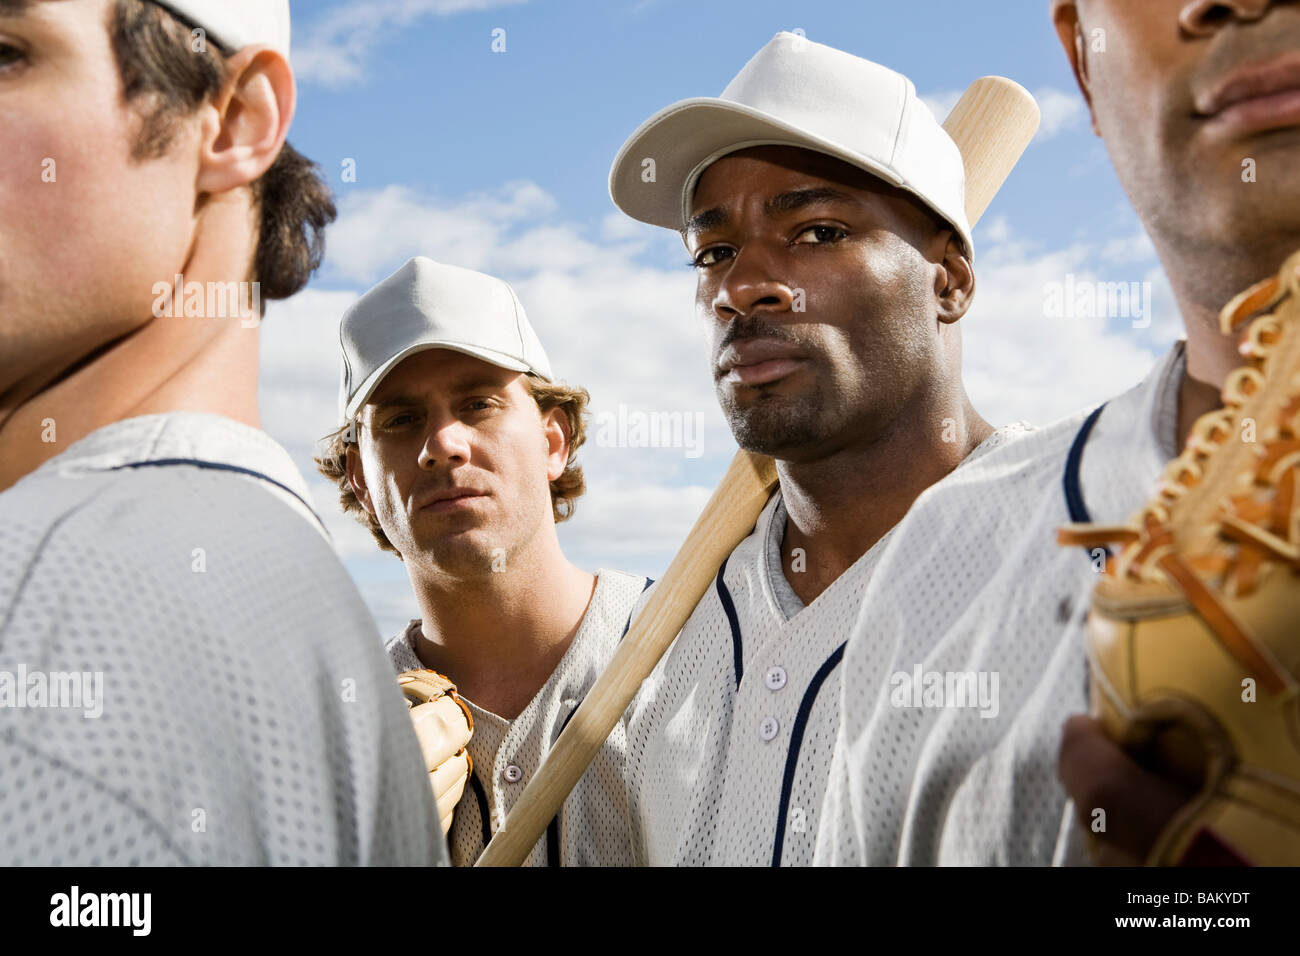 Retrato de un equipo de béisbol Foto de stock